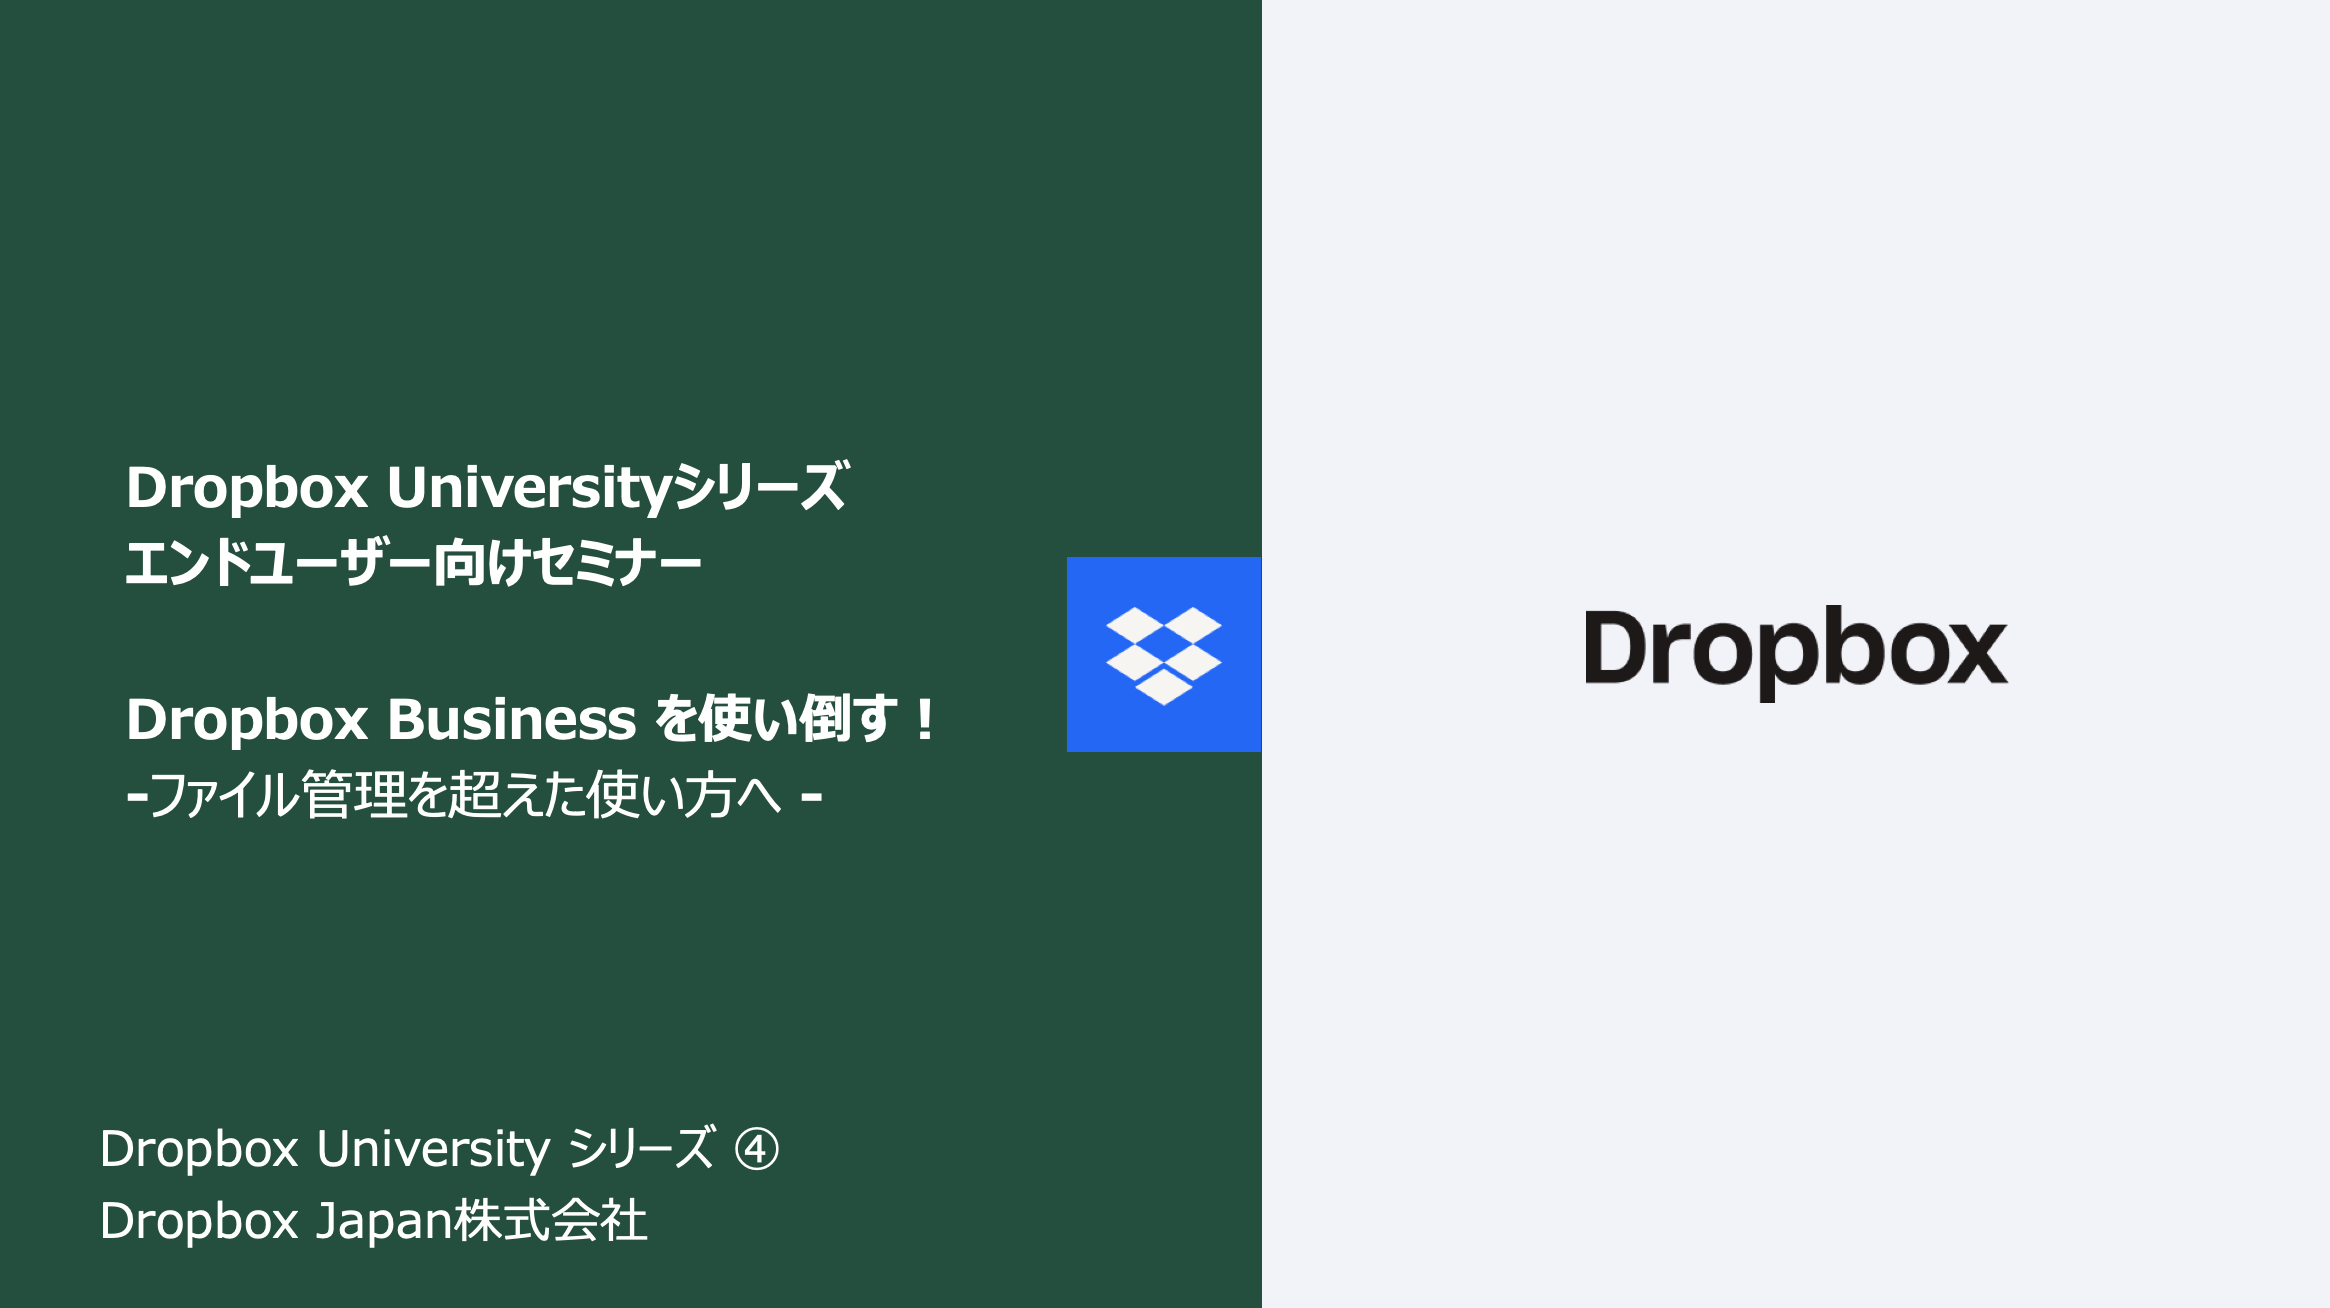 Dropbox University ユーザー向け中級編